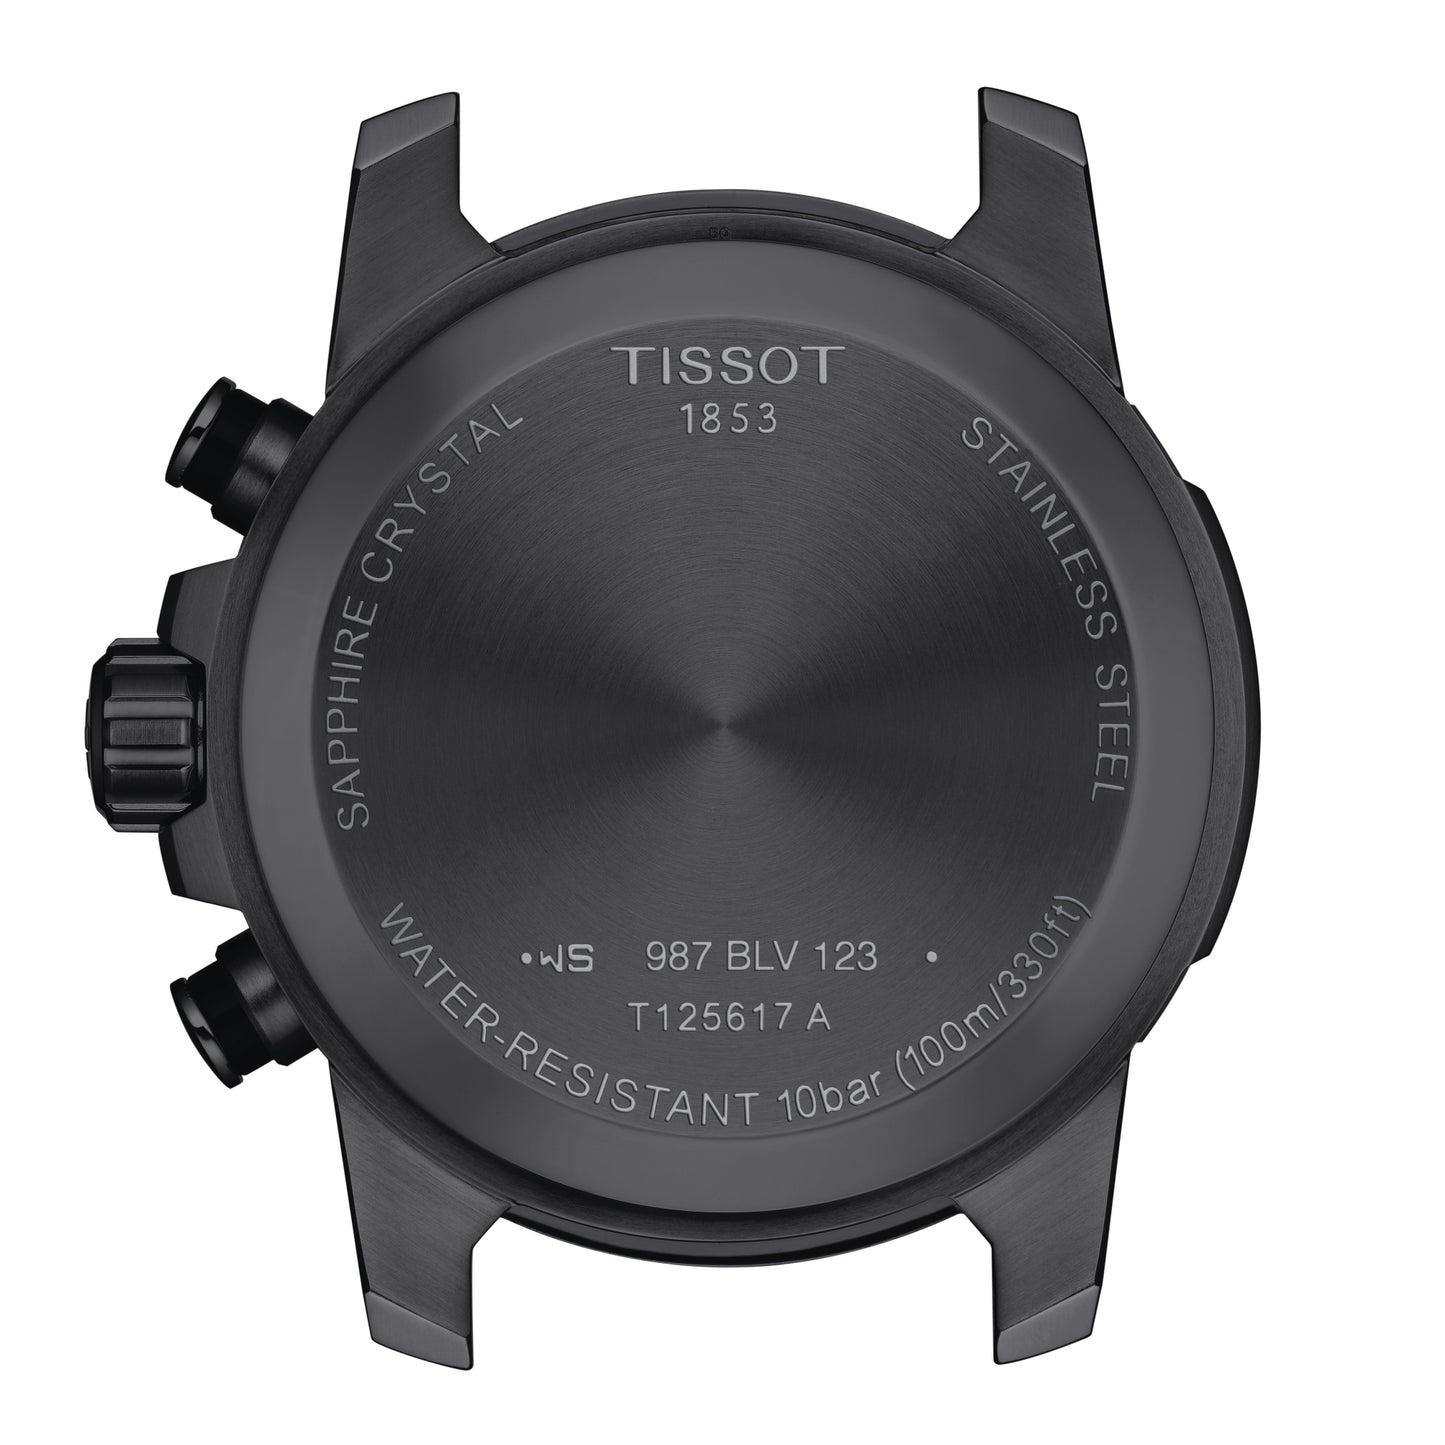 Tissot Supersport Chrono - Black with Beige Strap